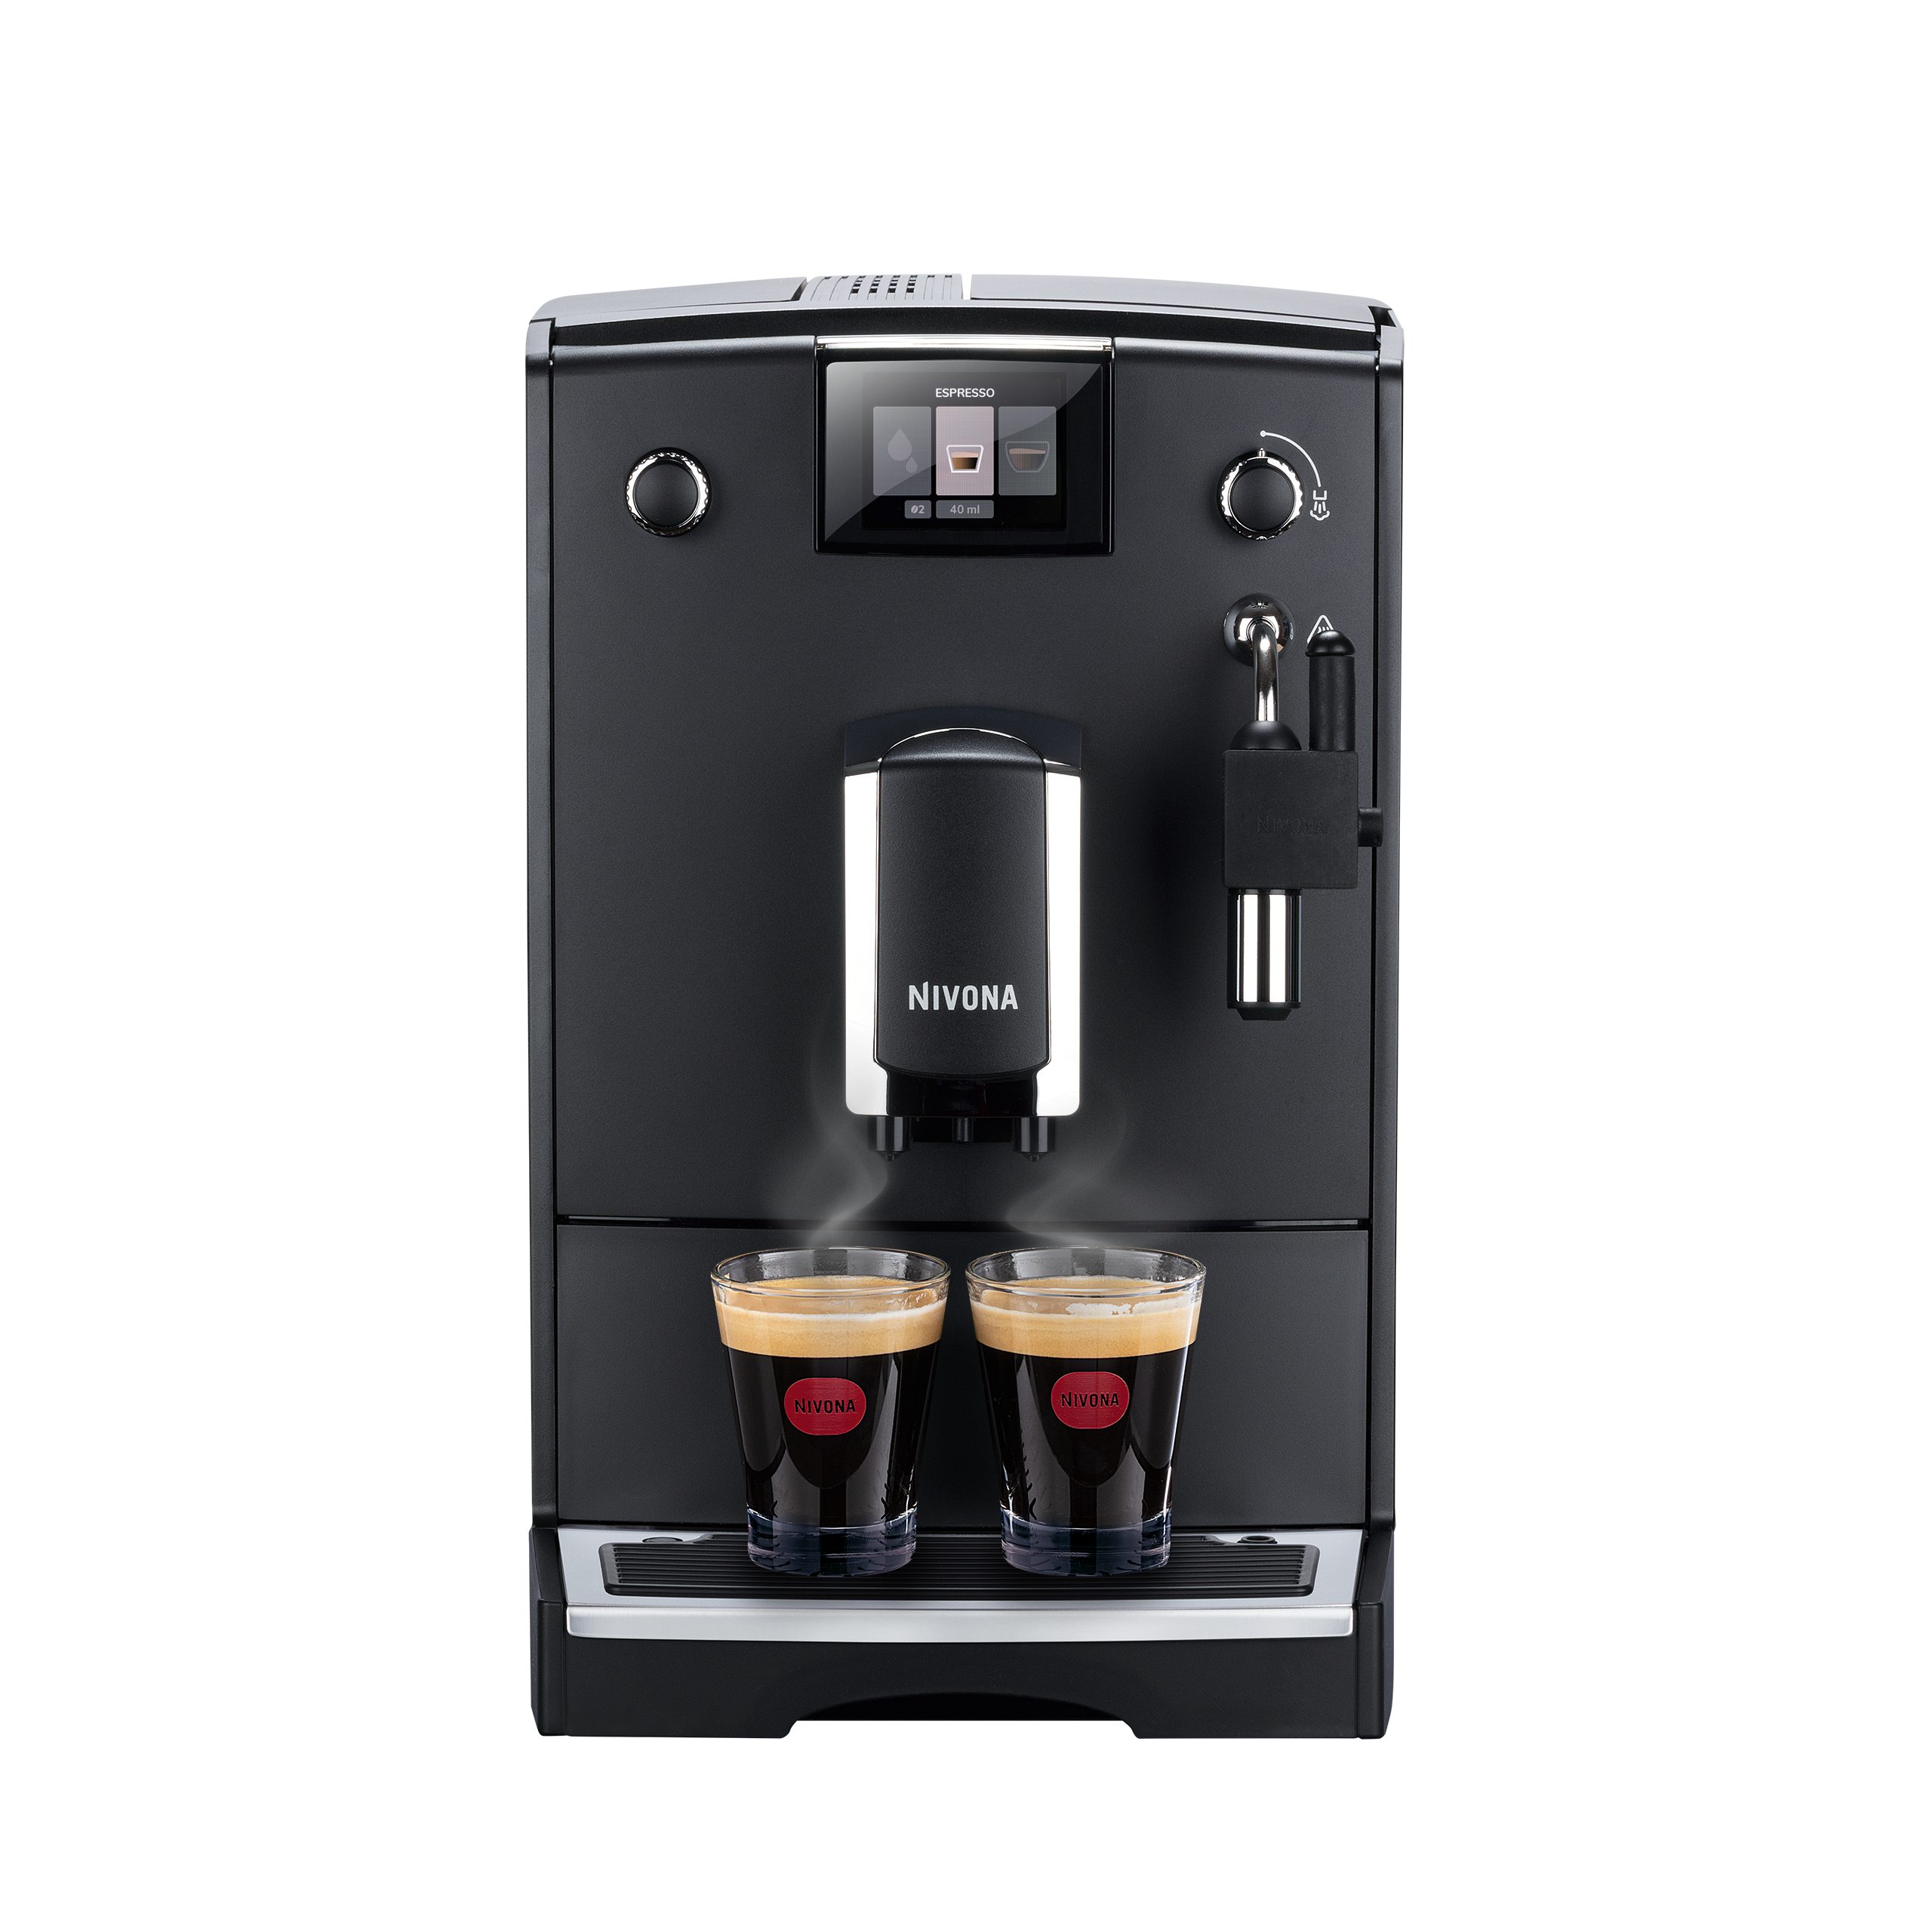 g NICR Nivona CafeRomatica 550, 250 Bohnenbehälter Kaffeevollautomat